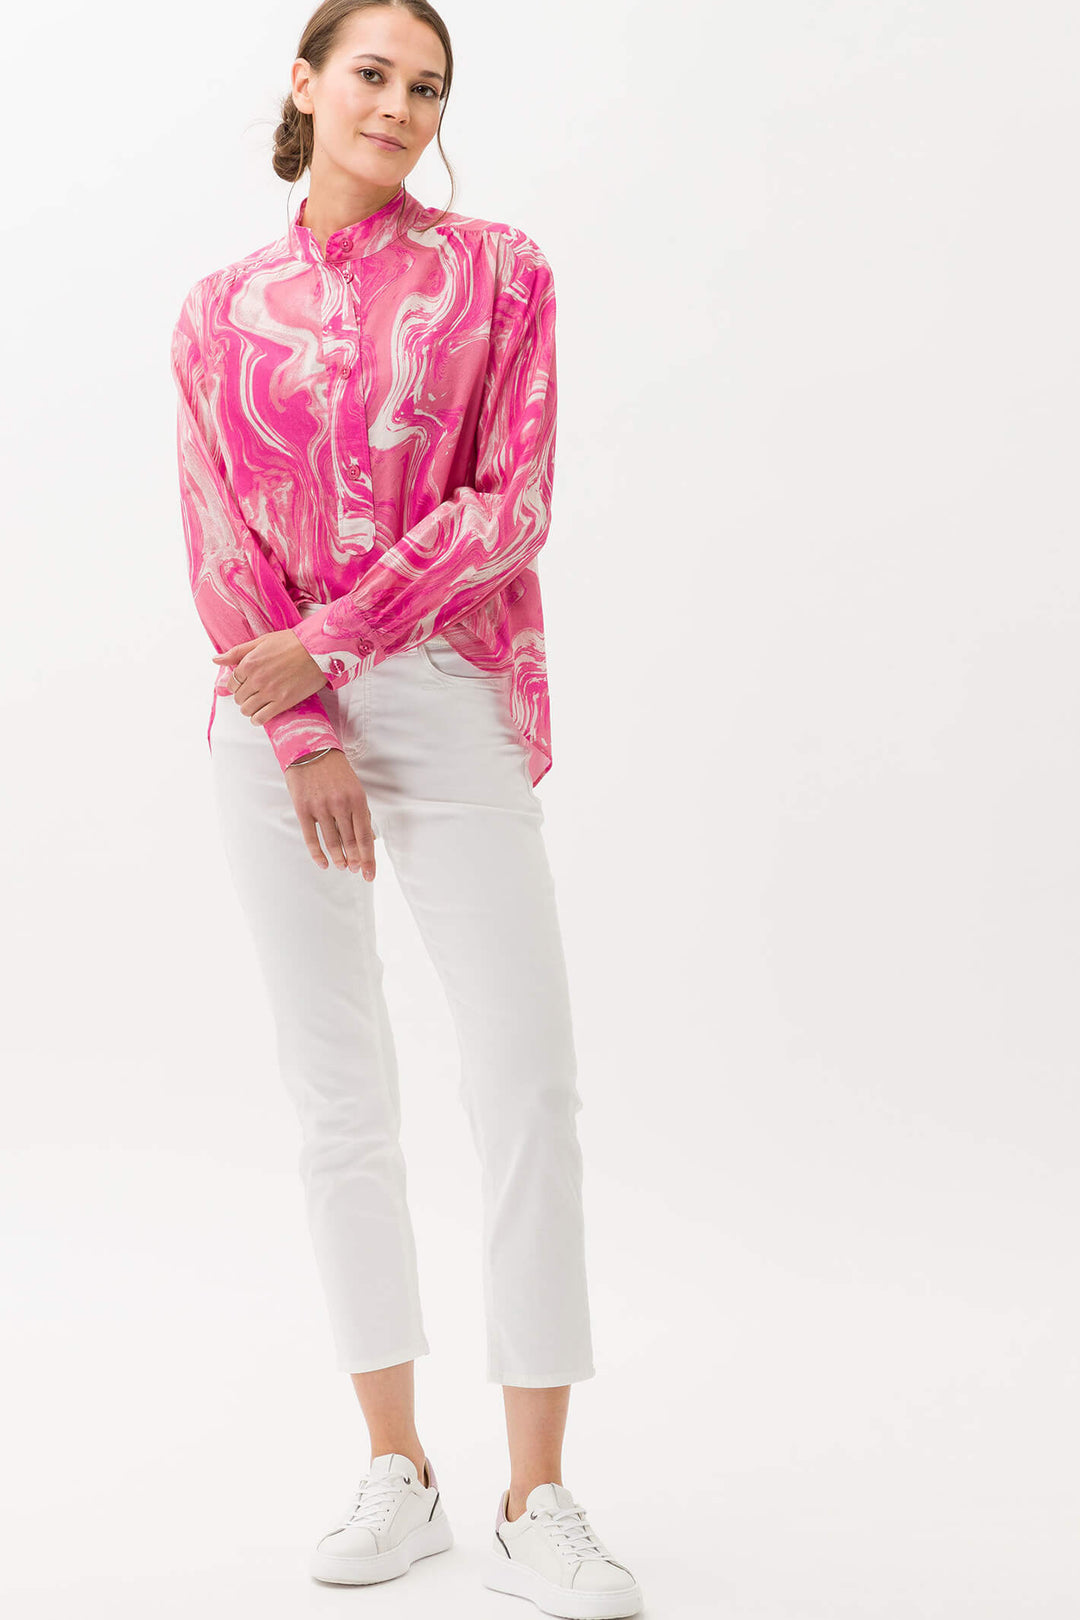 Brax Mary S 71-7558-99 White Denim Jeans - Olivia Grace Fashion